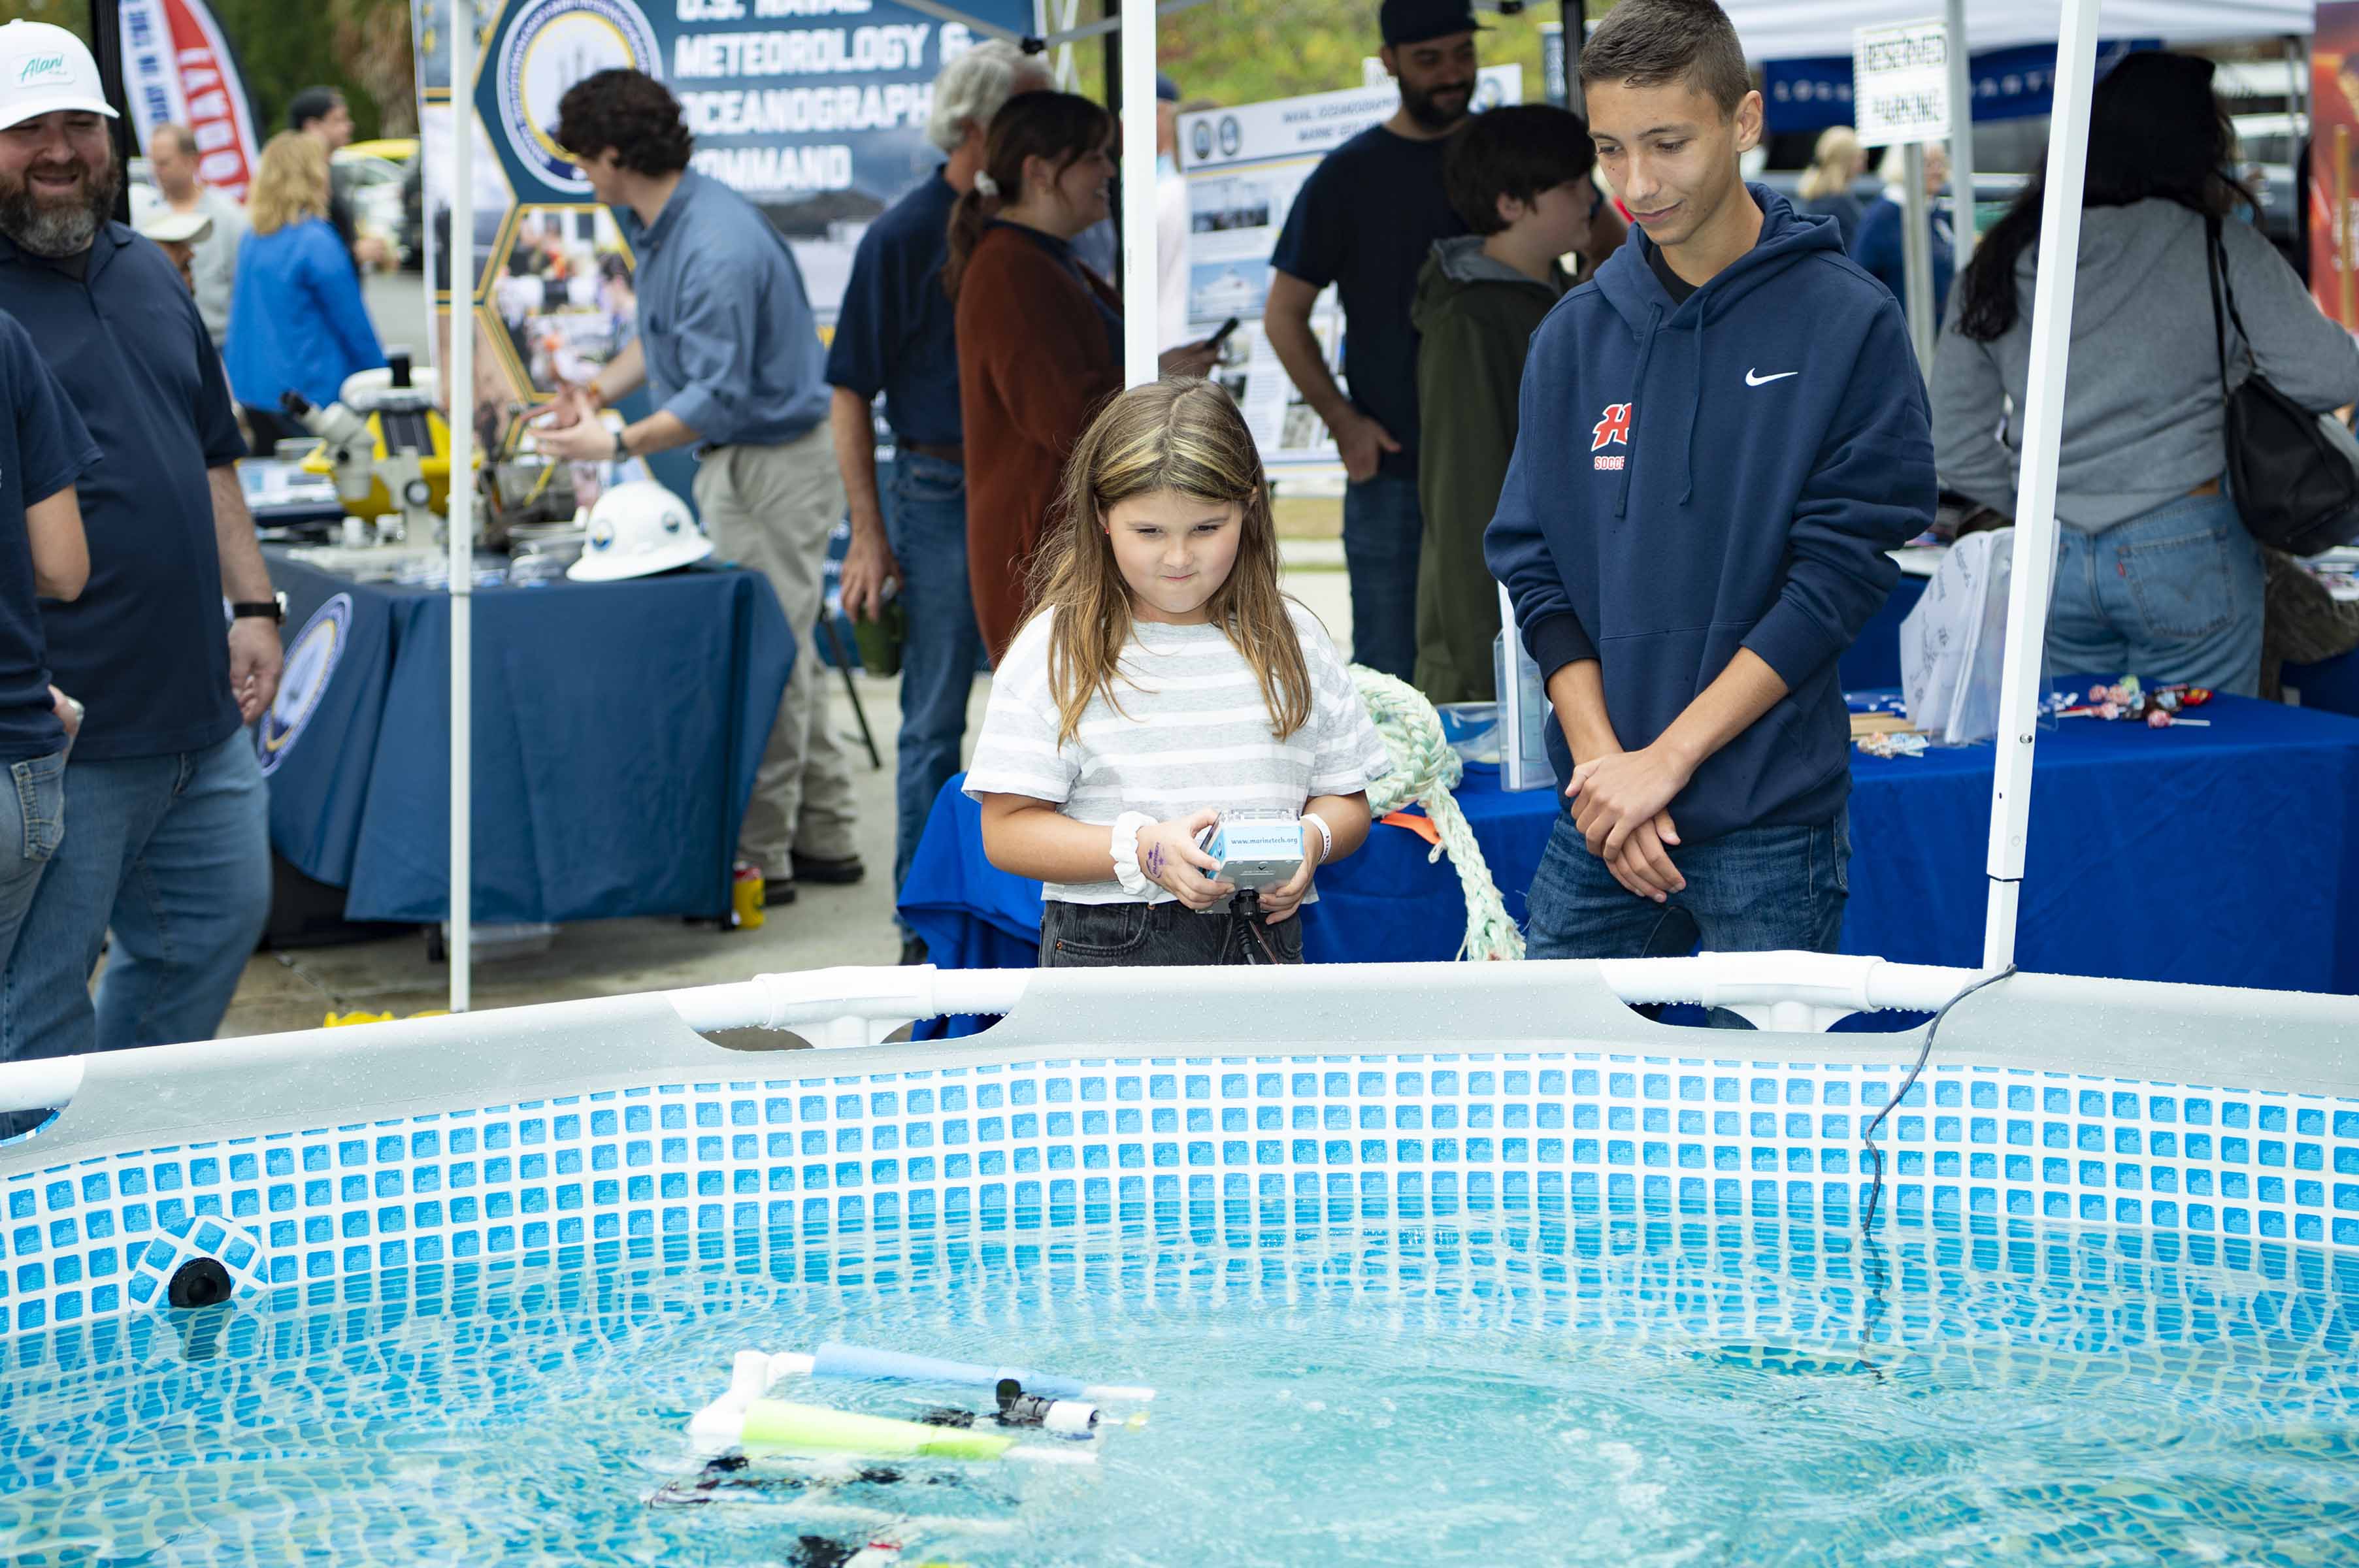 Students navigate robot underwater.